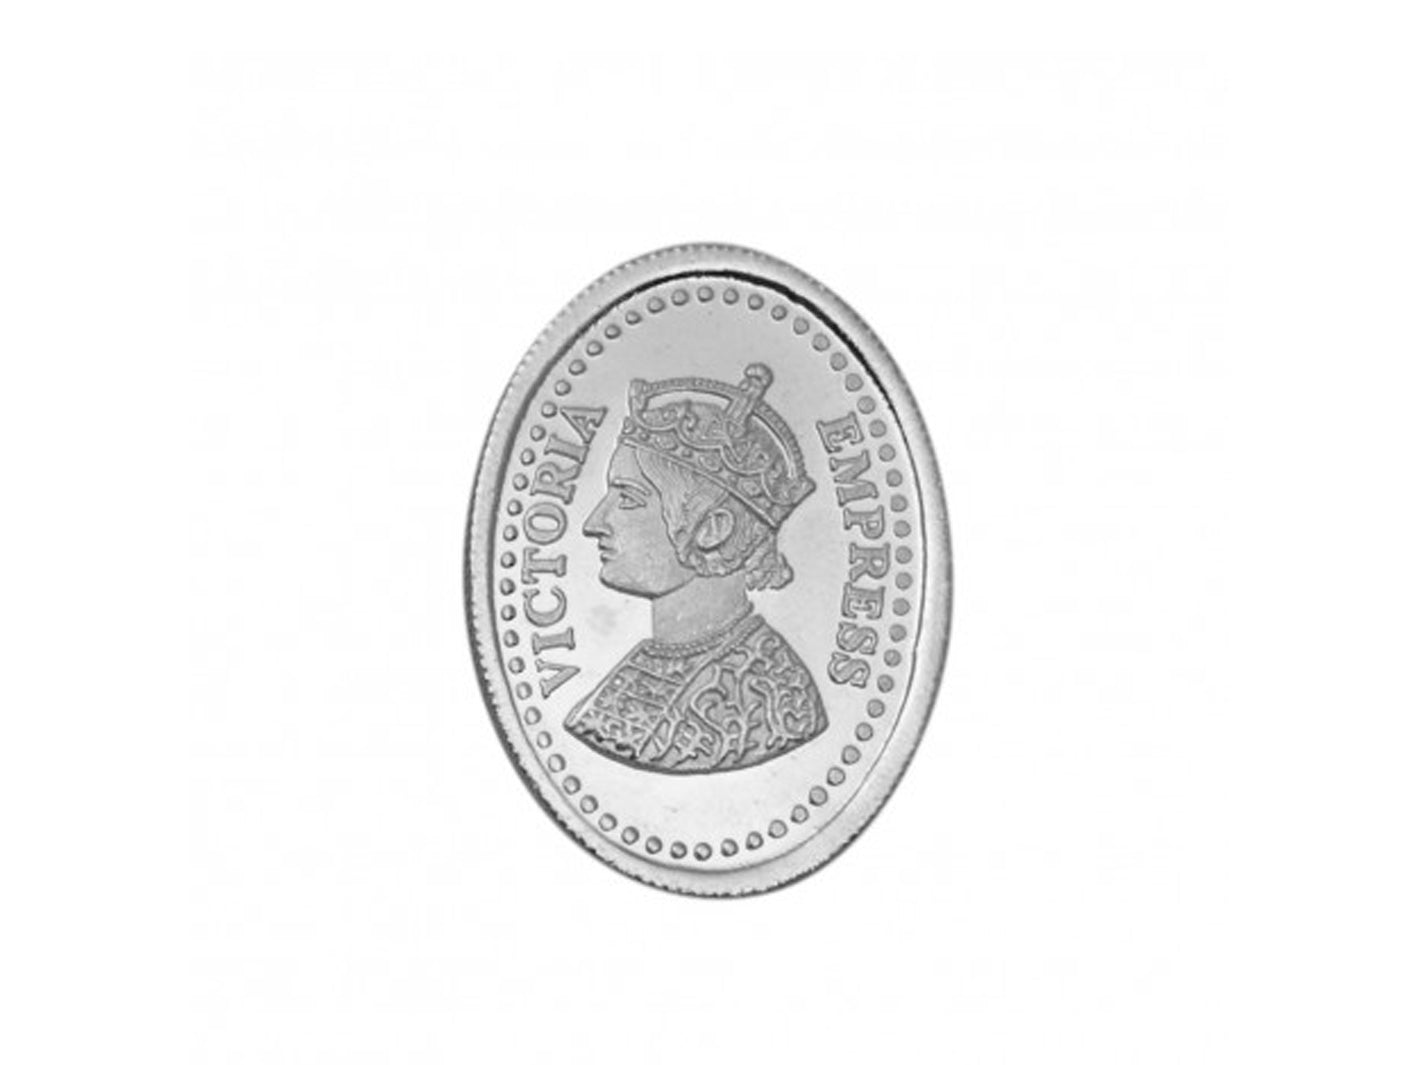 10 Grams Victoria Empress Silver Coin - Roop Darshan